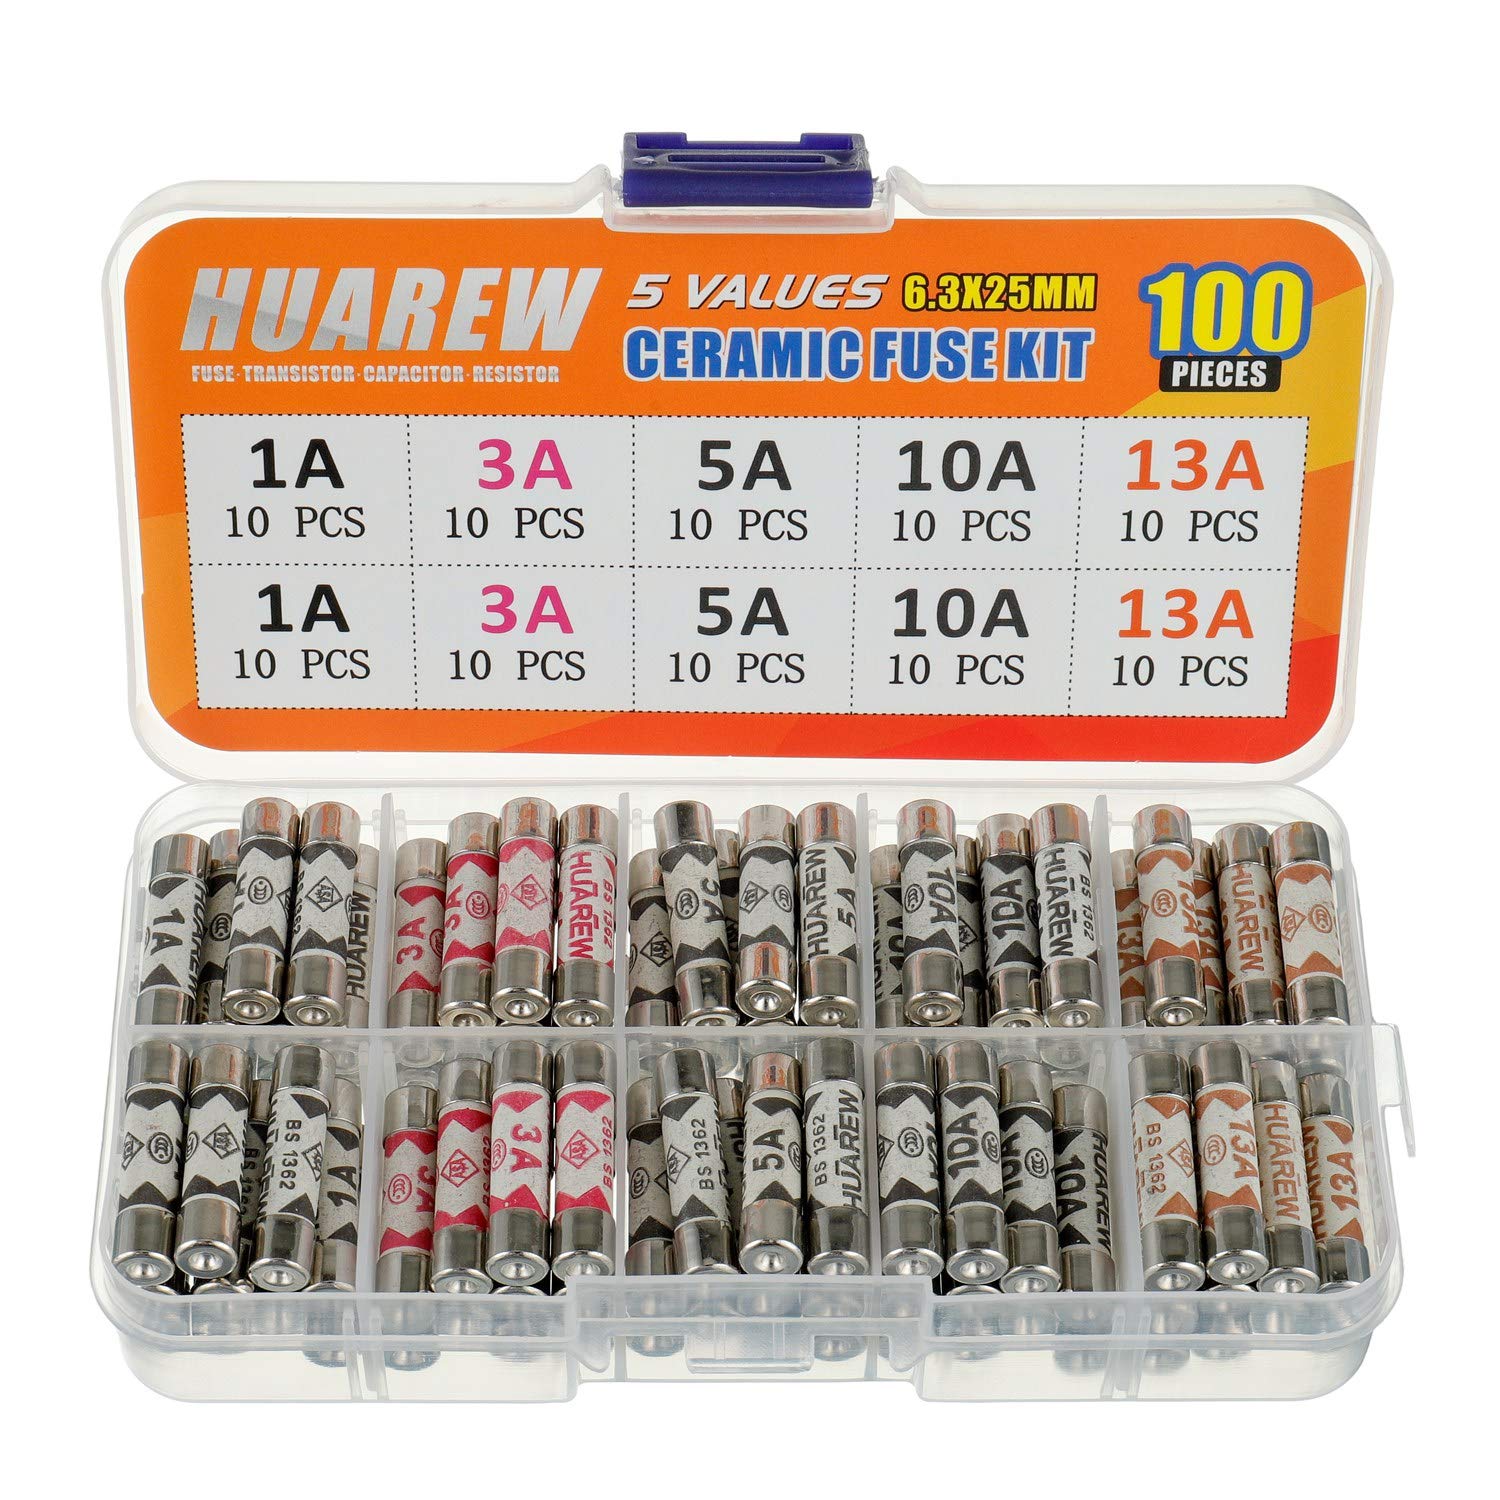 HUAREW 5 Values 100 Pcs 6.3x25 mm BS1362 1 3 5 10 13 A amp 240 V volt 0.248x0.984 Inch Ceramic Tube Fuses Assortment Kit von HUAREW